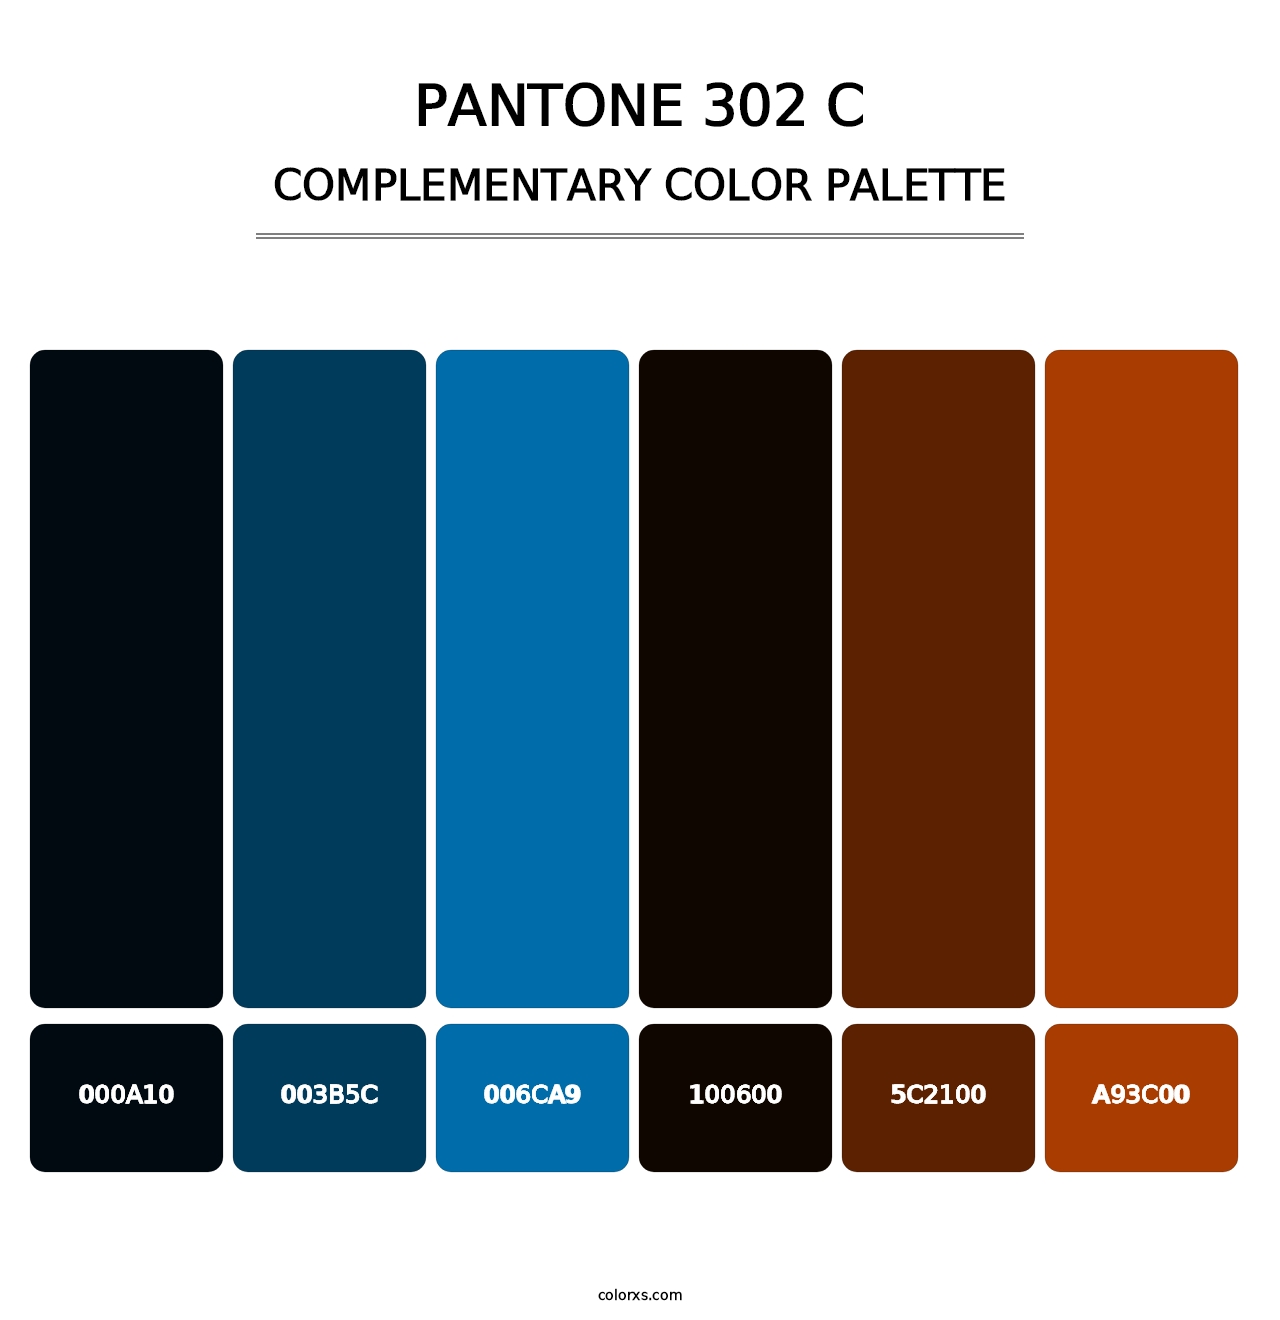 PANTONE 302 C - Complementary Color Palette